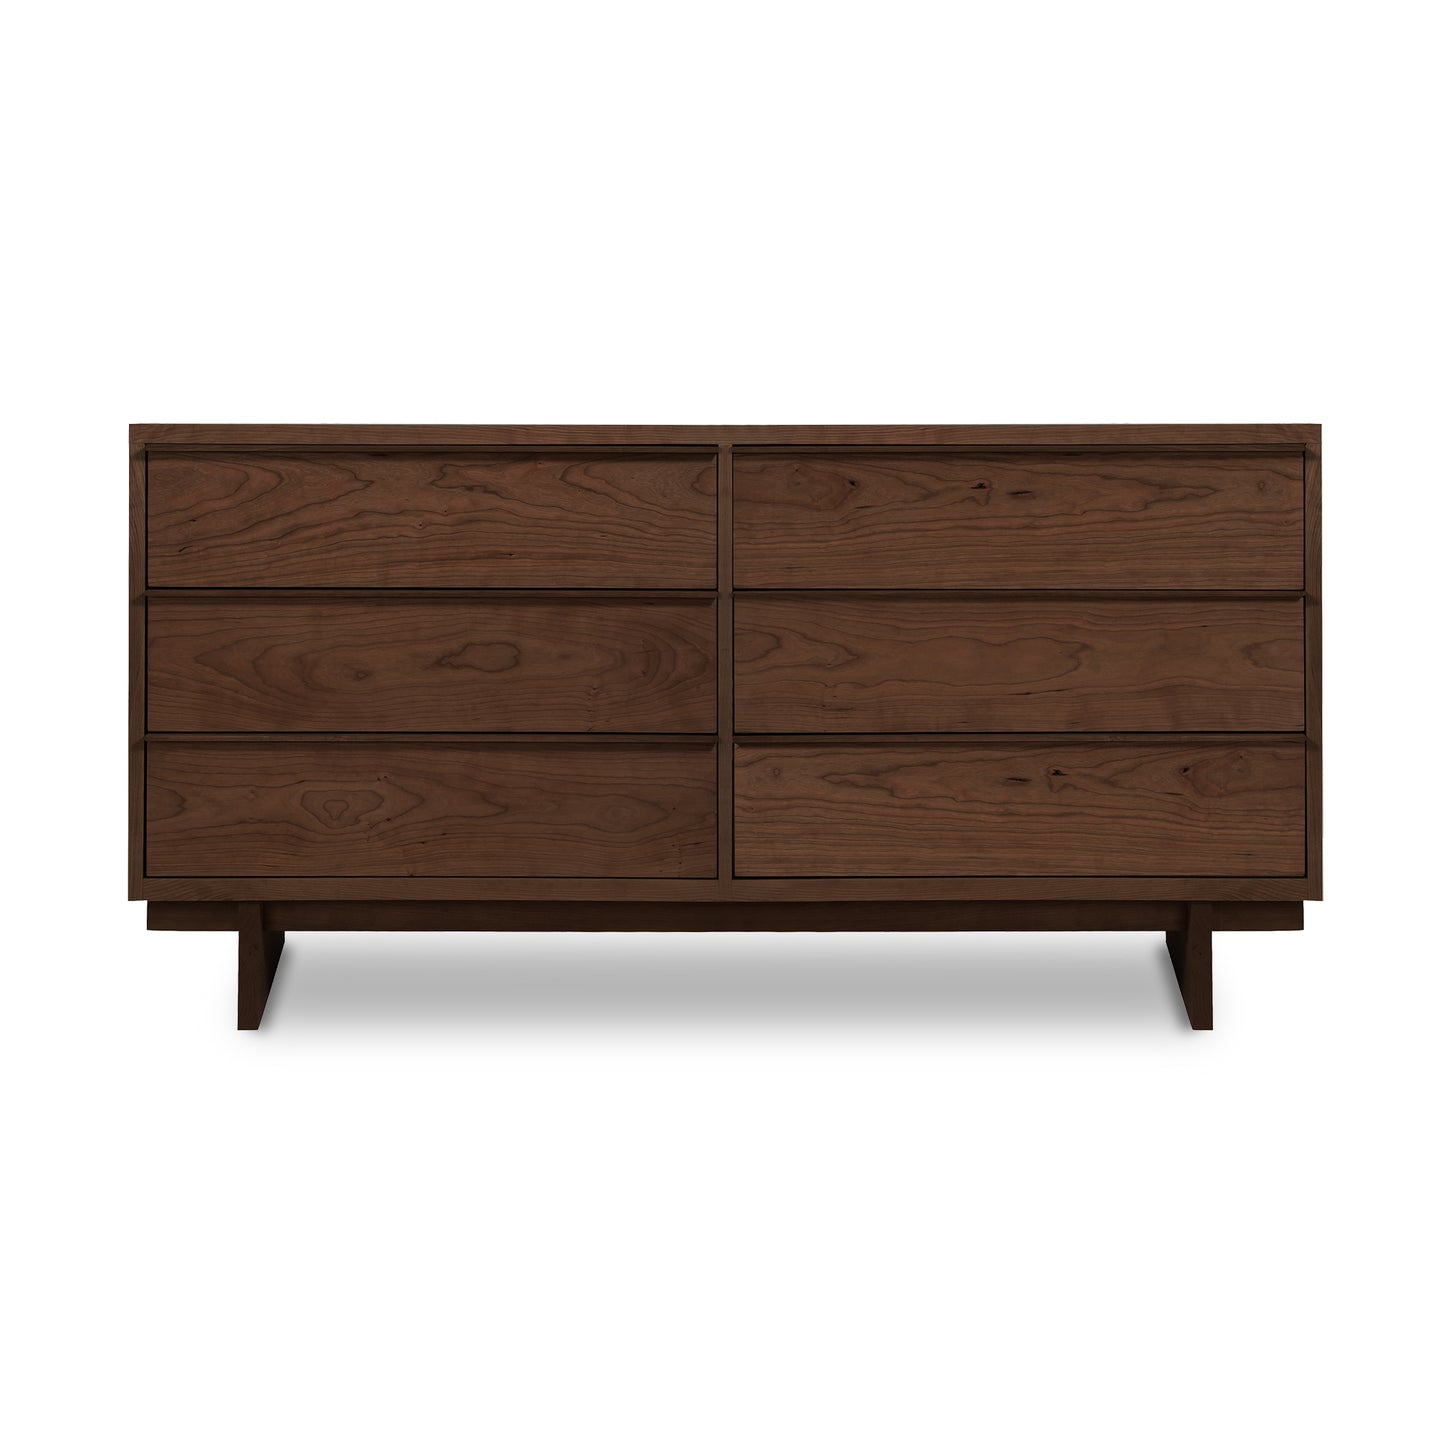 A modern wooden Vermont Furniture Designs Kipling 6-Drawer Dresser stands against a plain white background.